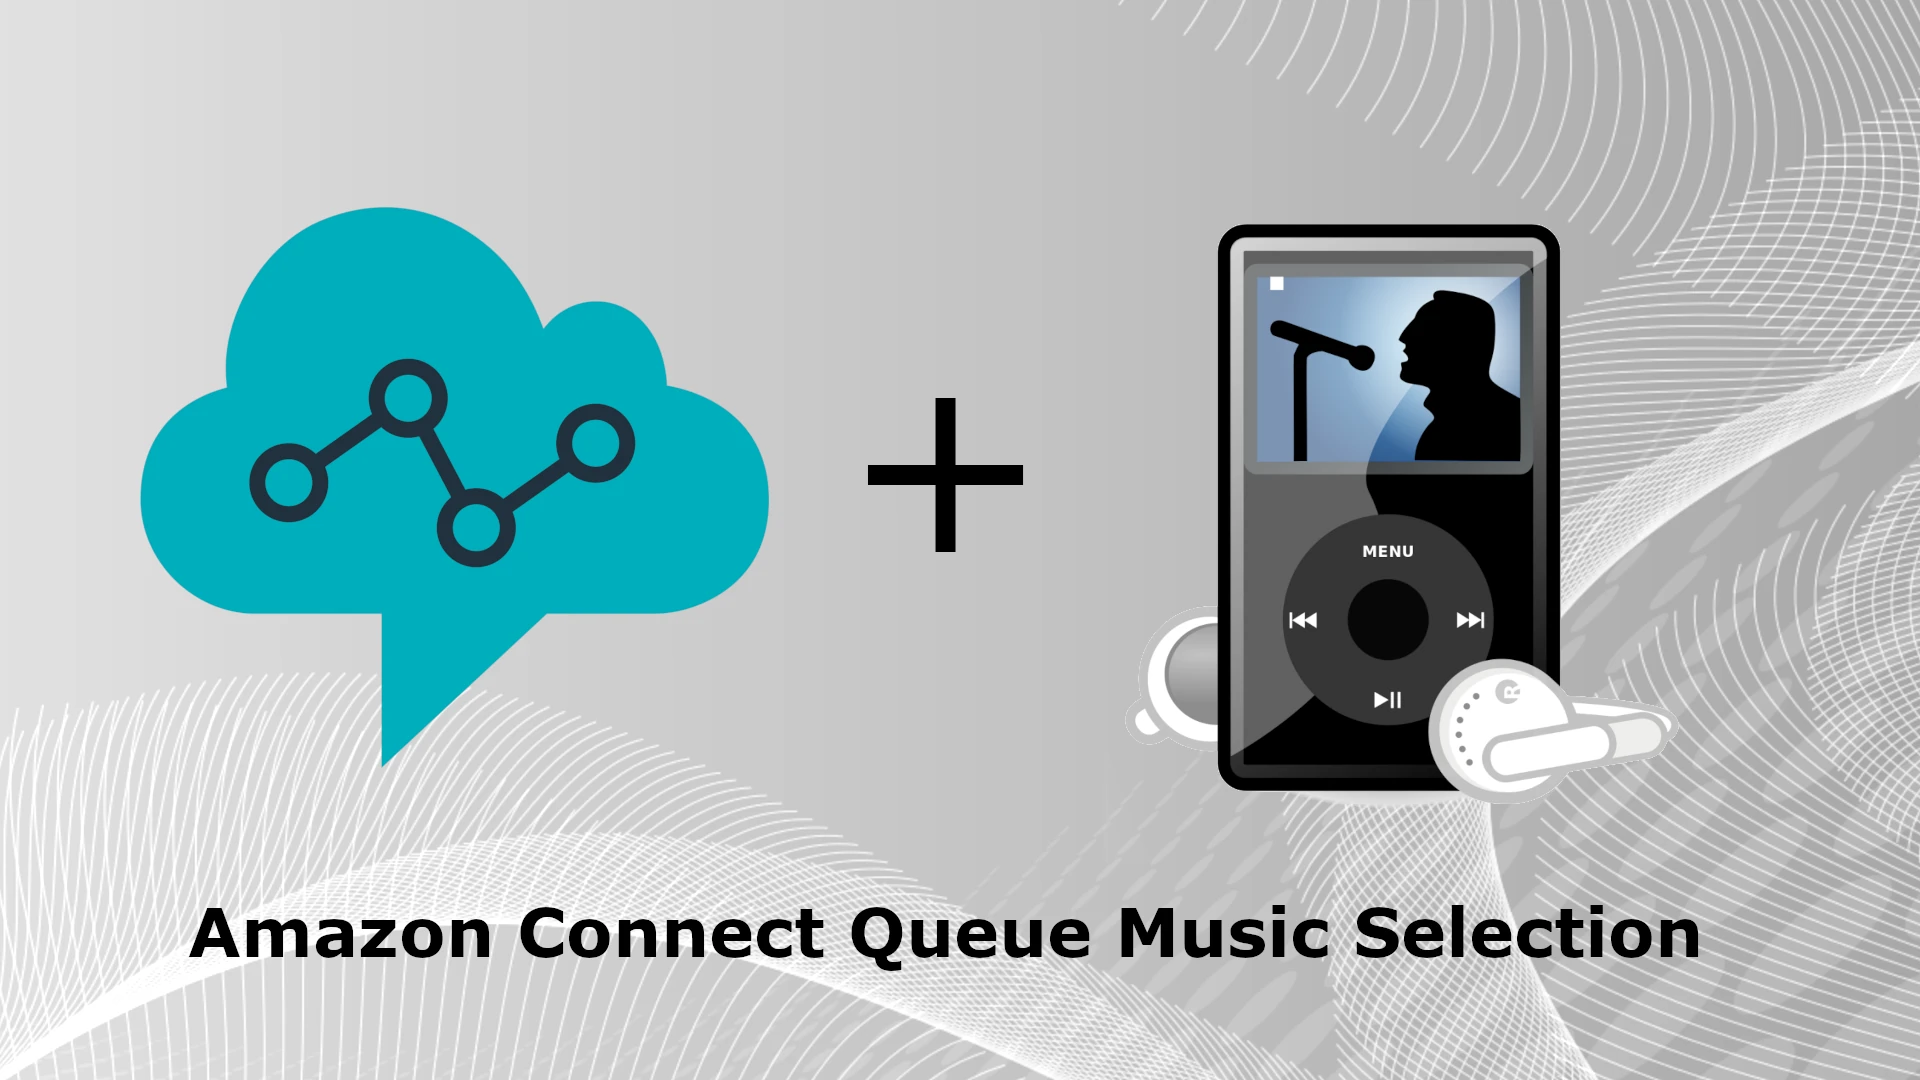 Amazon Connect: Customer control of queue music